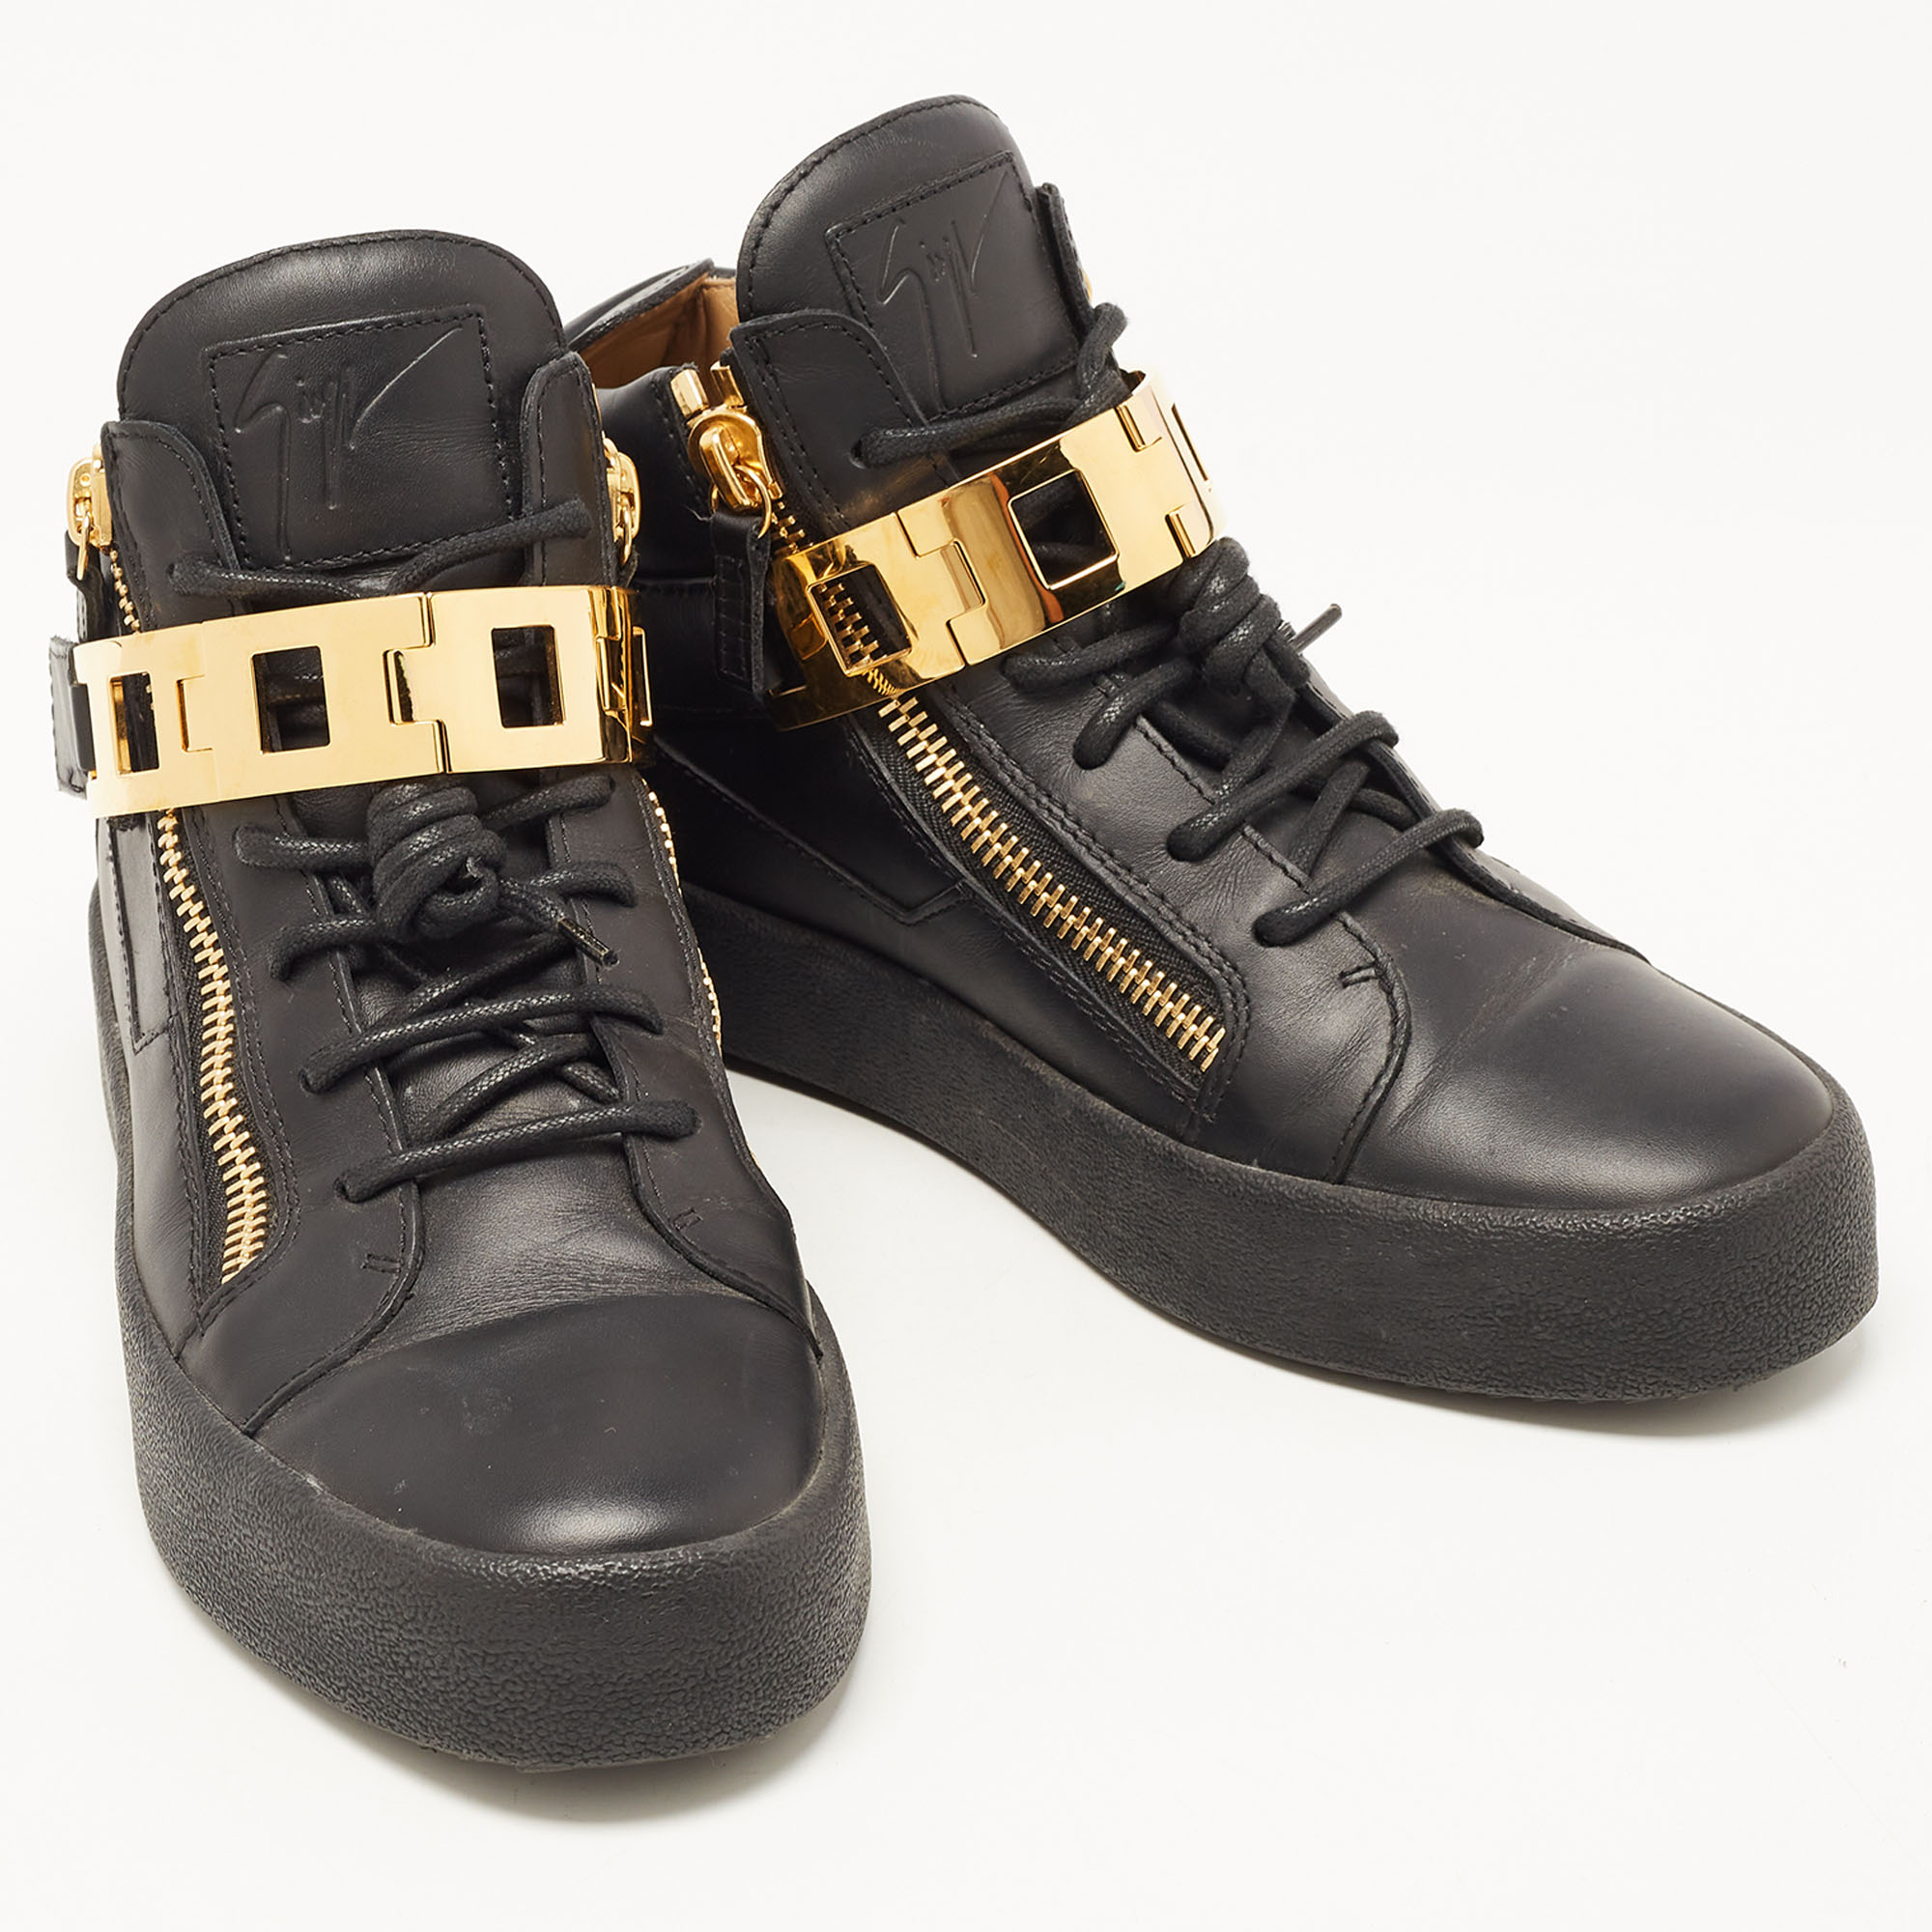 Giuseppe Zanotti Black Leather High Top Sneakers Size 40